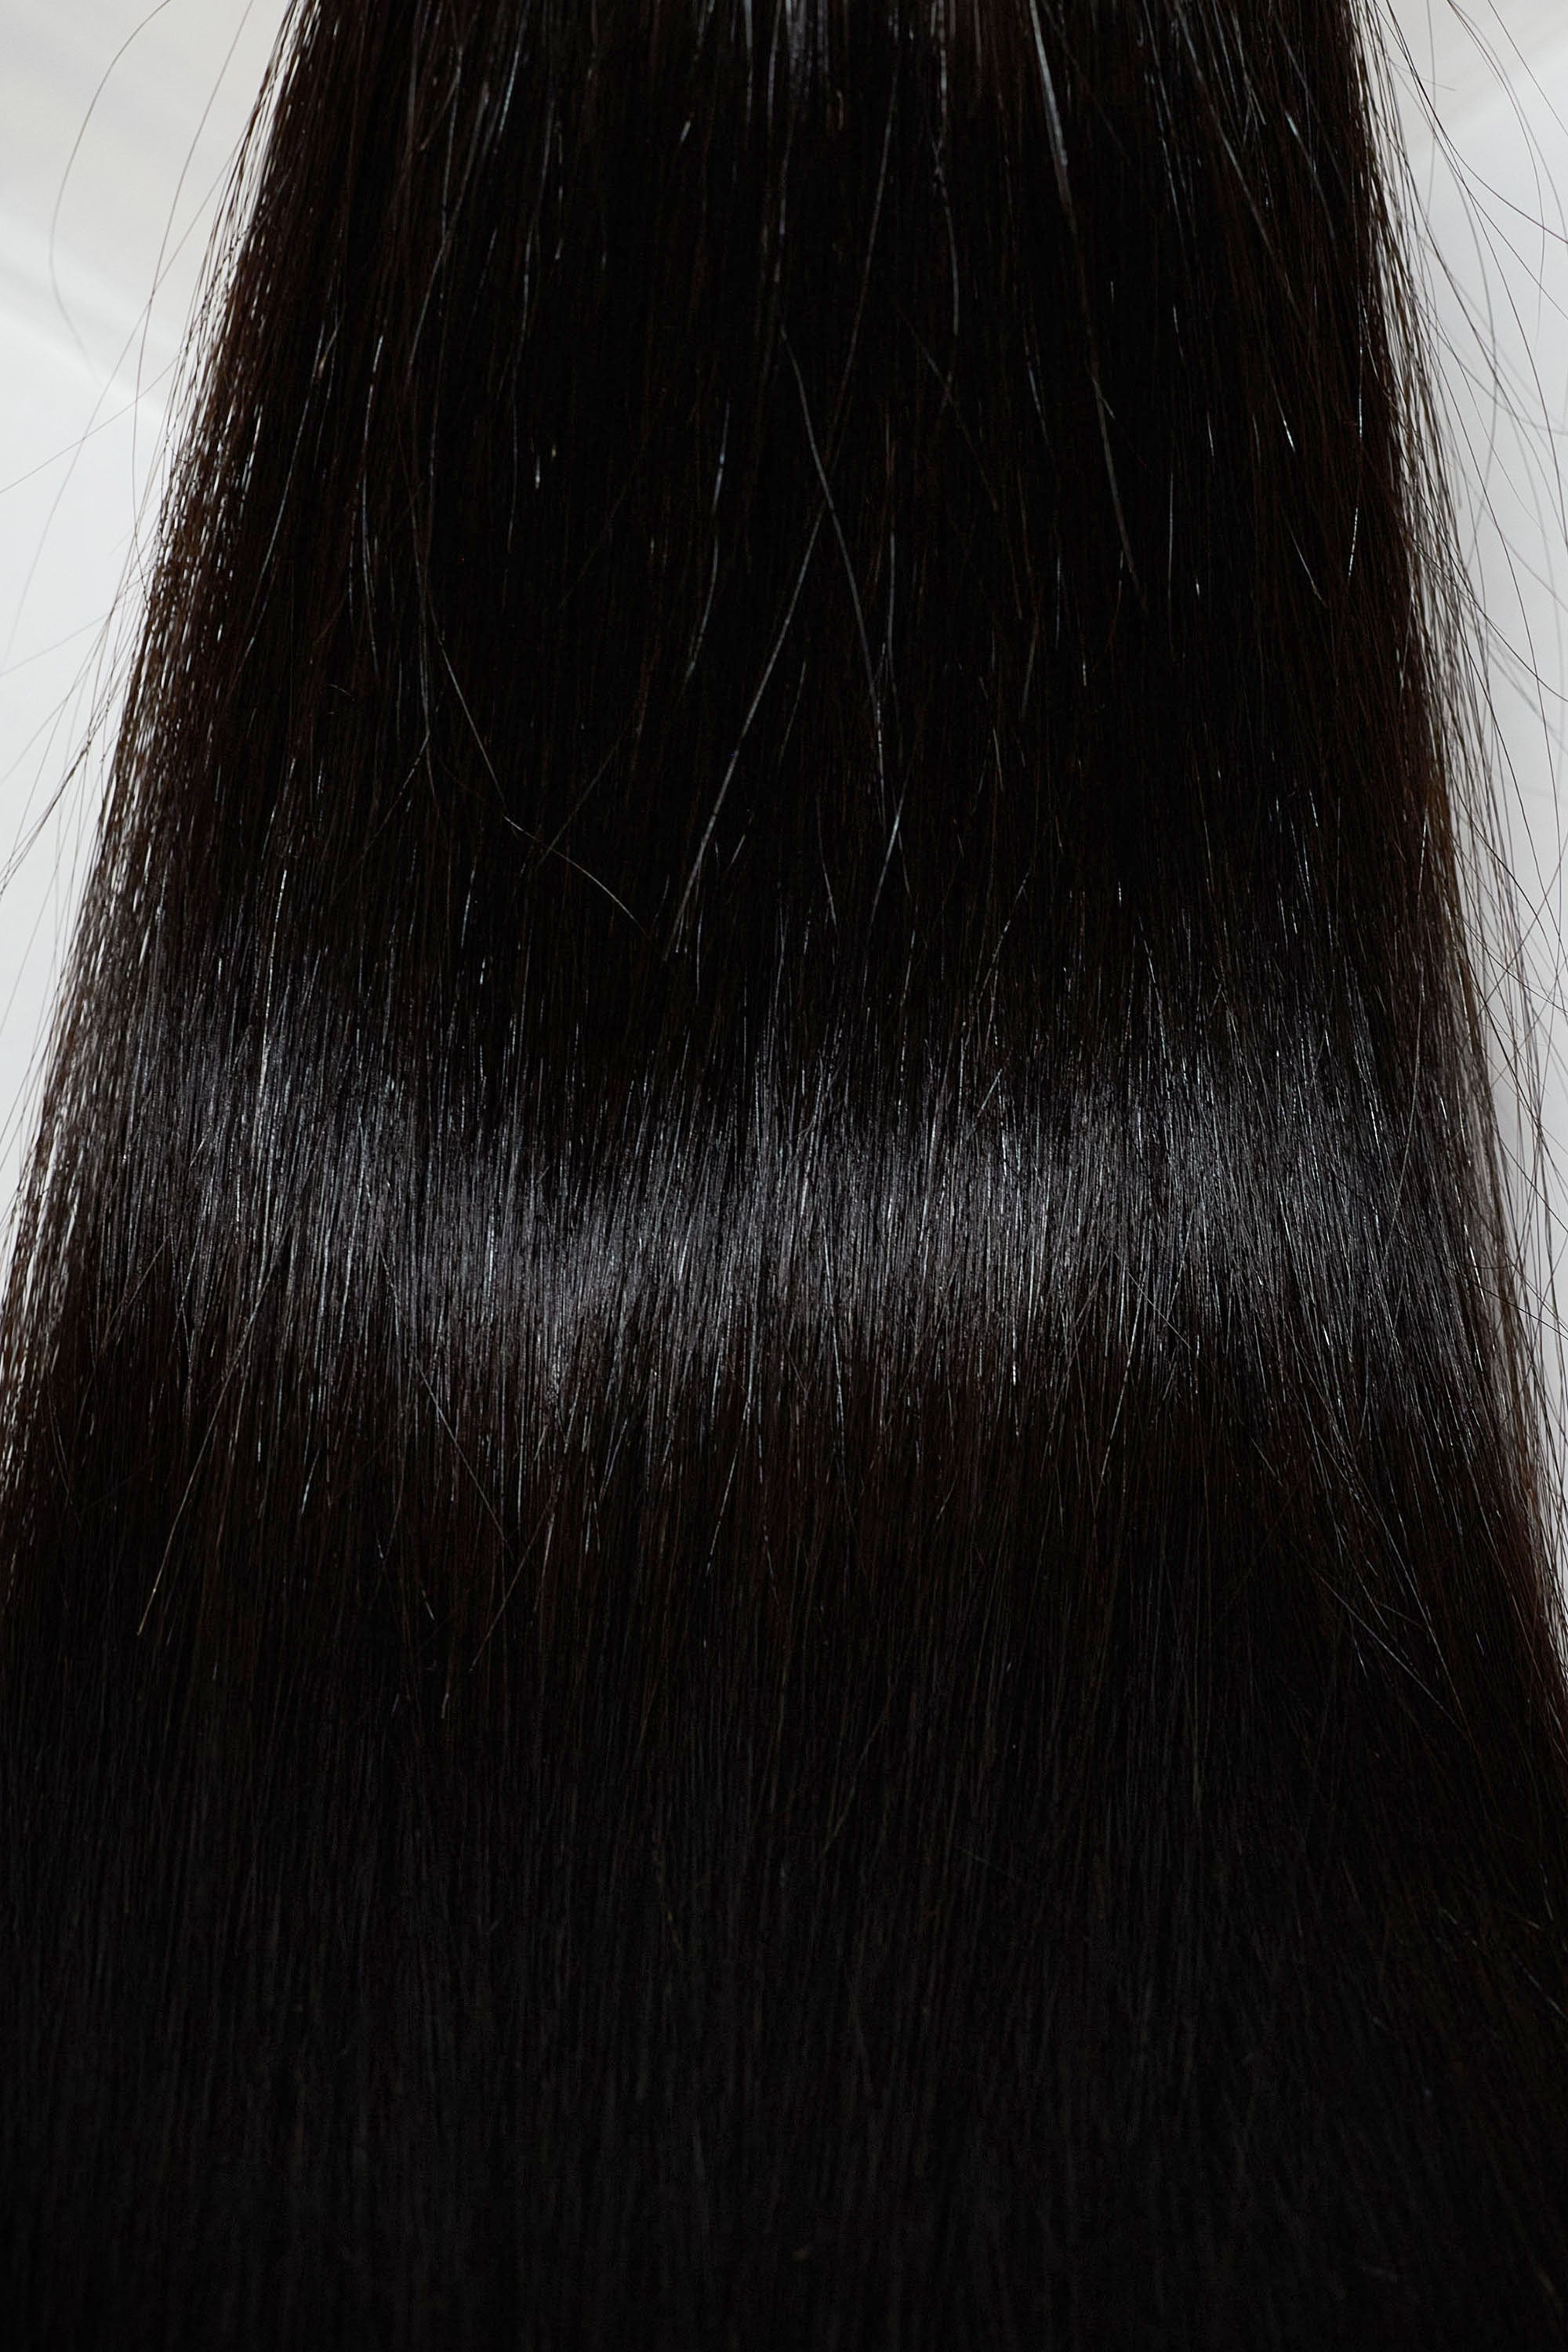 Behair professional Keratin Tip "Premium" 26" (65cm) Natural Straight Jet Black #1 - 25g (1g each pcs) hair extensions